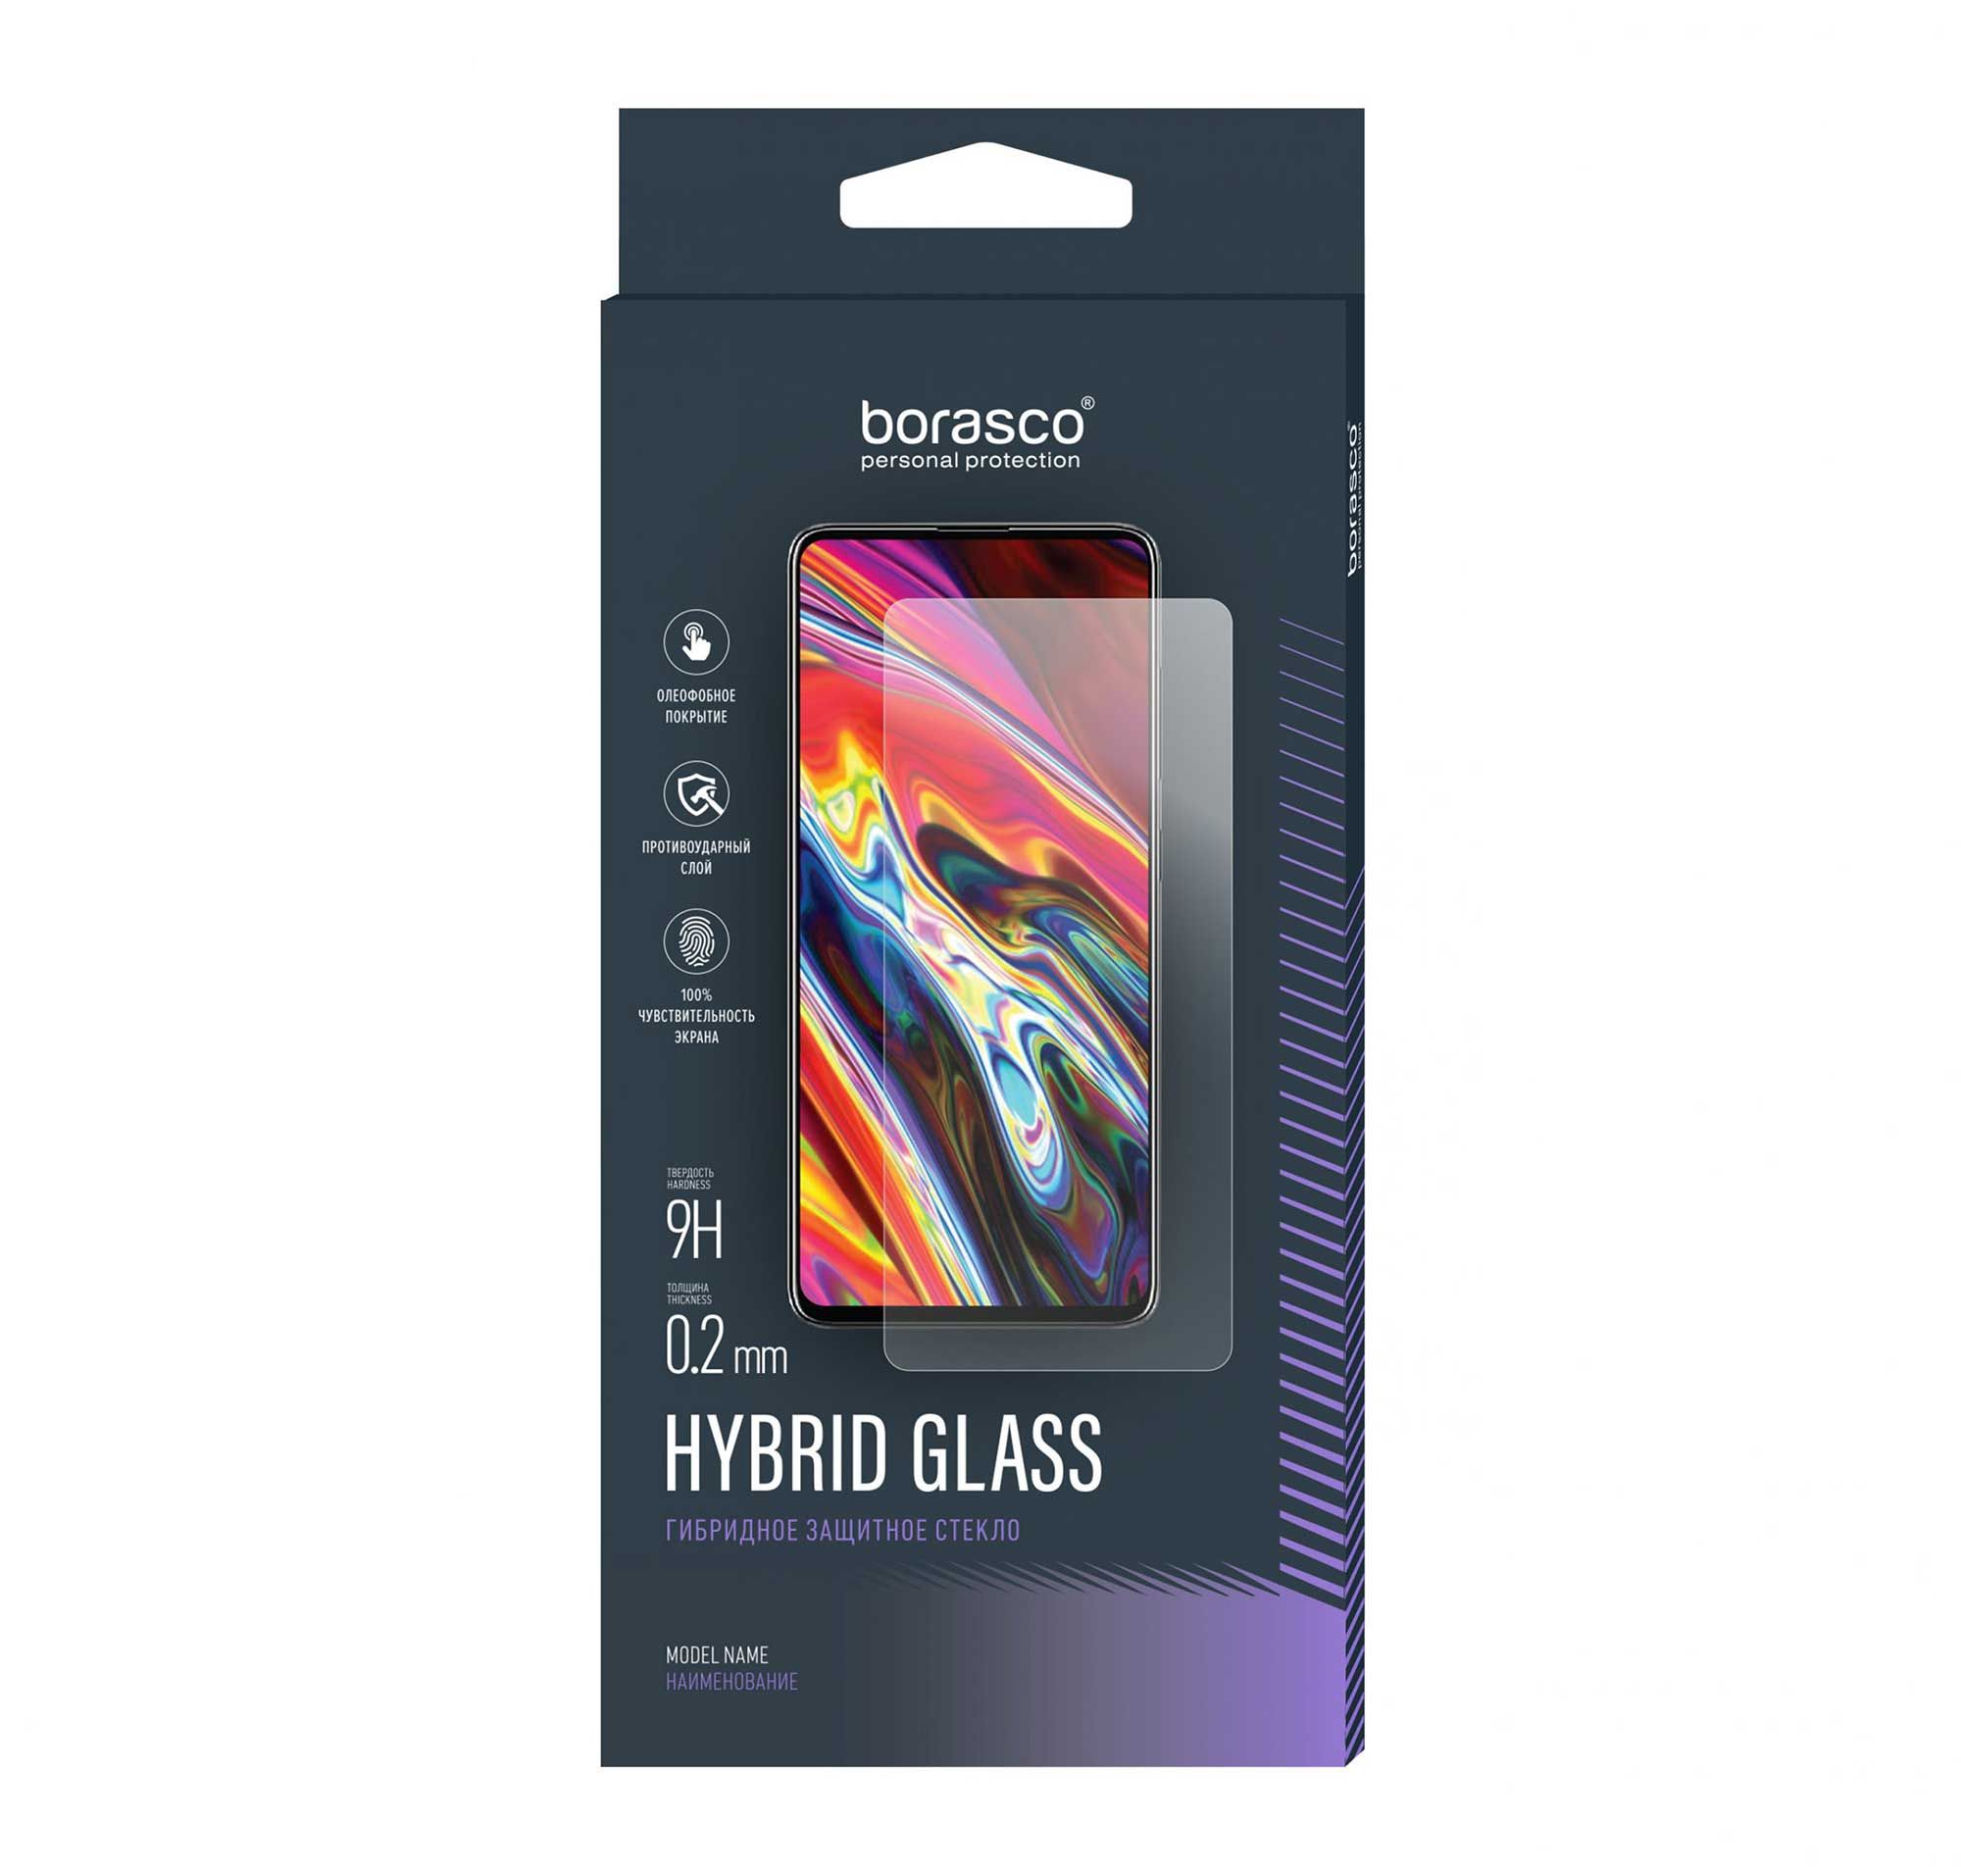 Защитное стекло Hybrid Glass для Huawei Nova Y70 защитное стекло luxcase для huawei nova 3 3d black